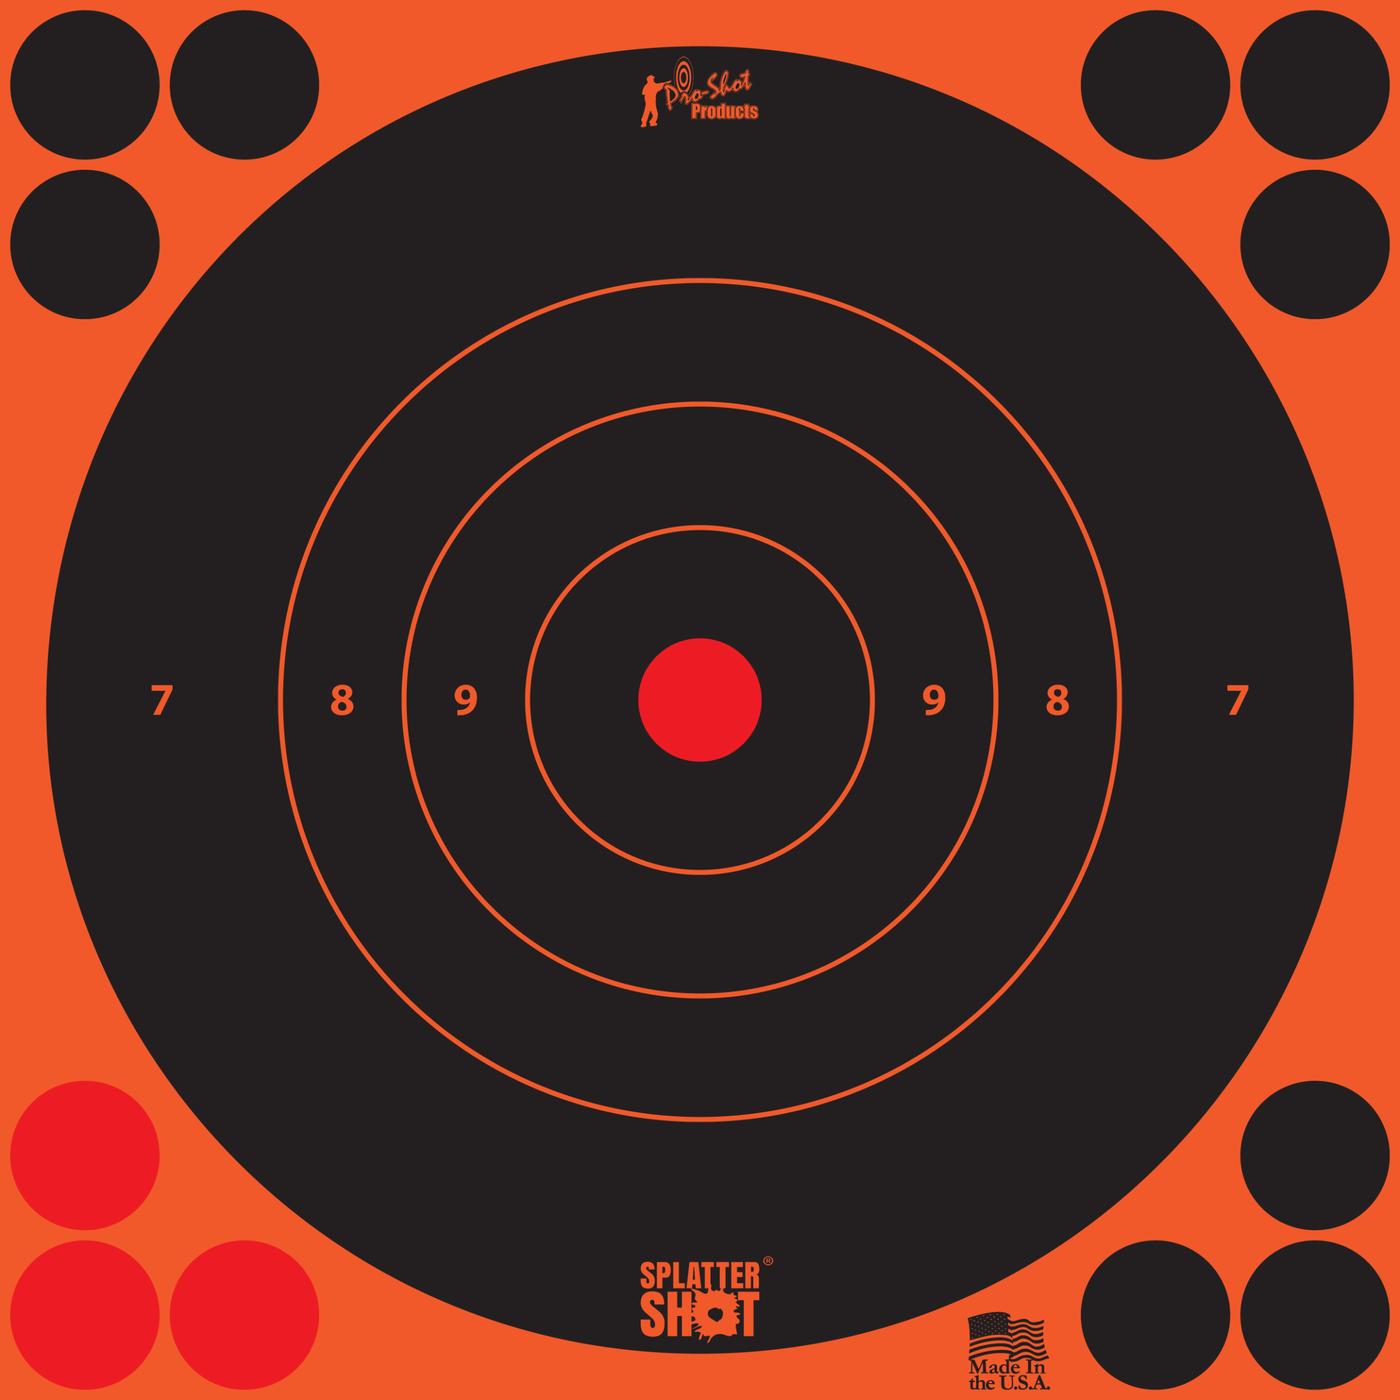 Pro-Shot Pro-shot Splattershot, Proshot 8b-orng-6pk   8" Splattershot Bullseye Trg Shooting